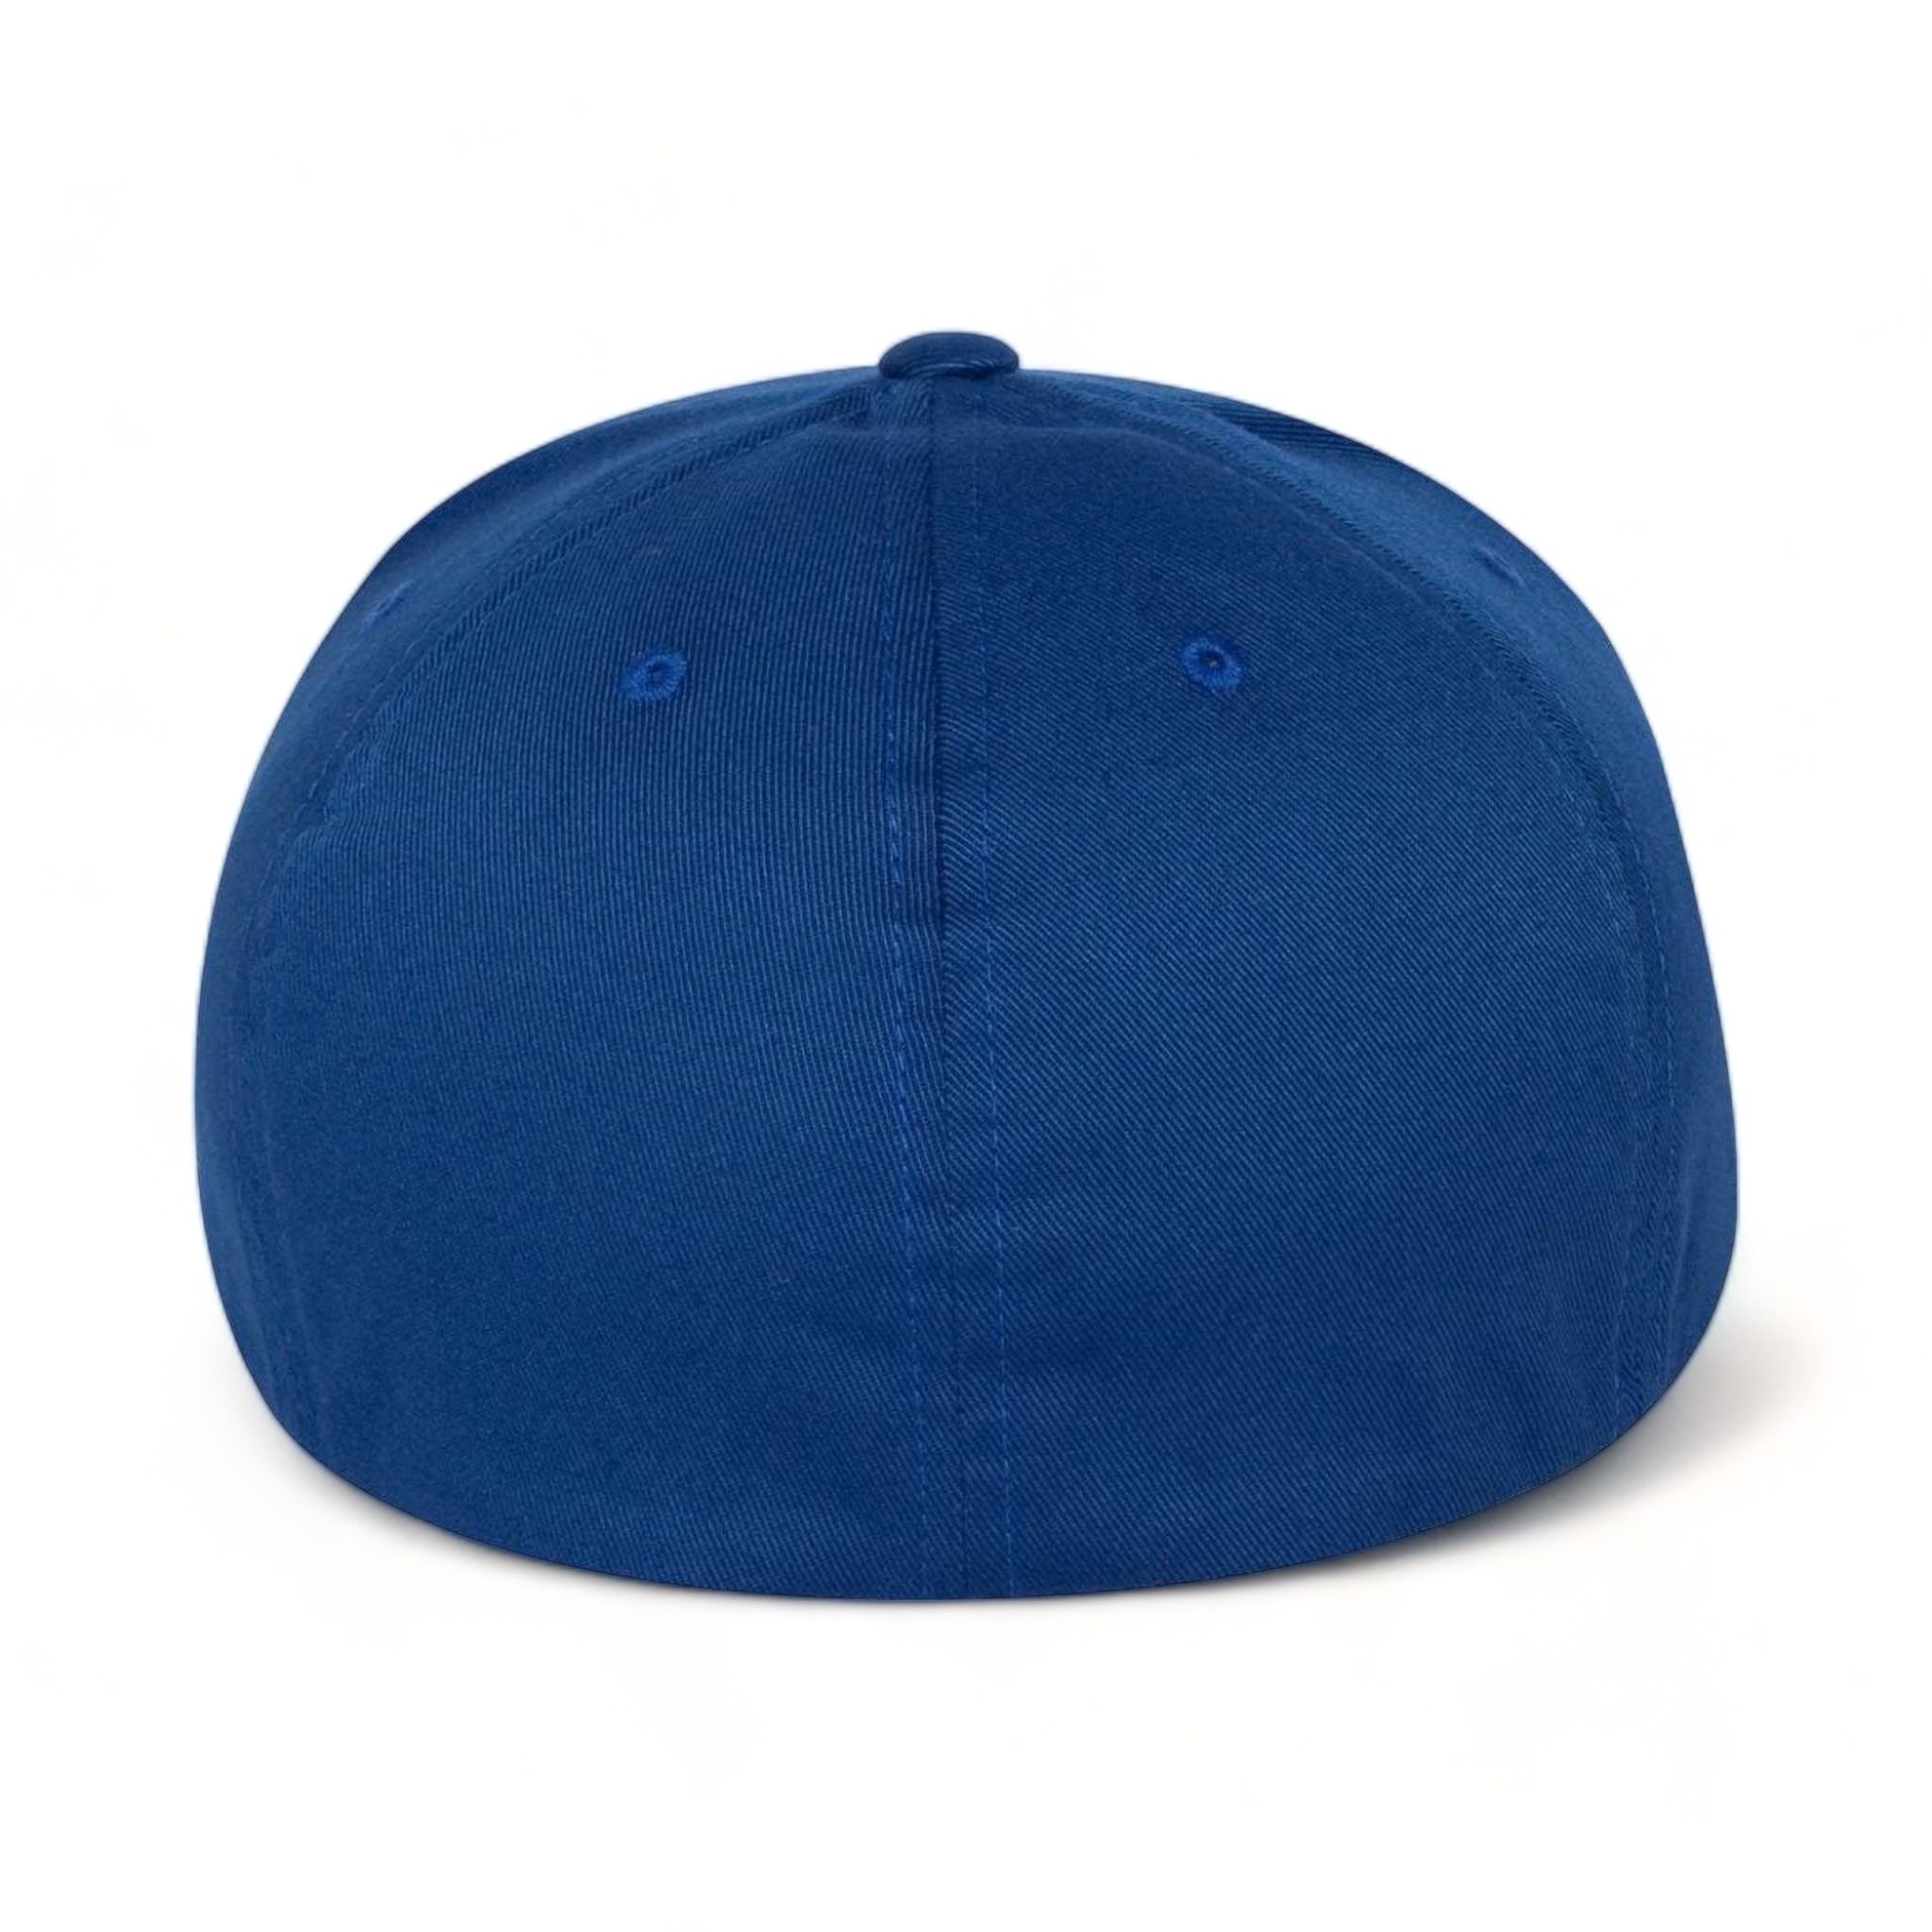 Back view of Flexfit 6297f custom hat in royal blue